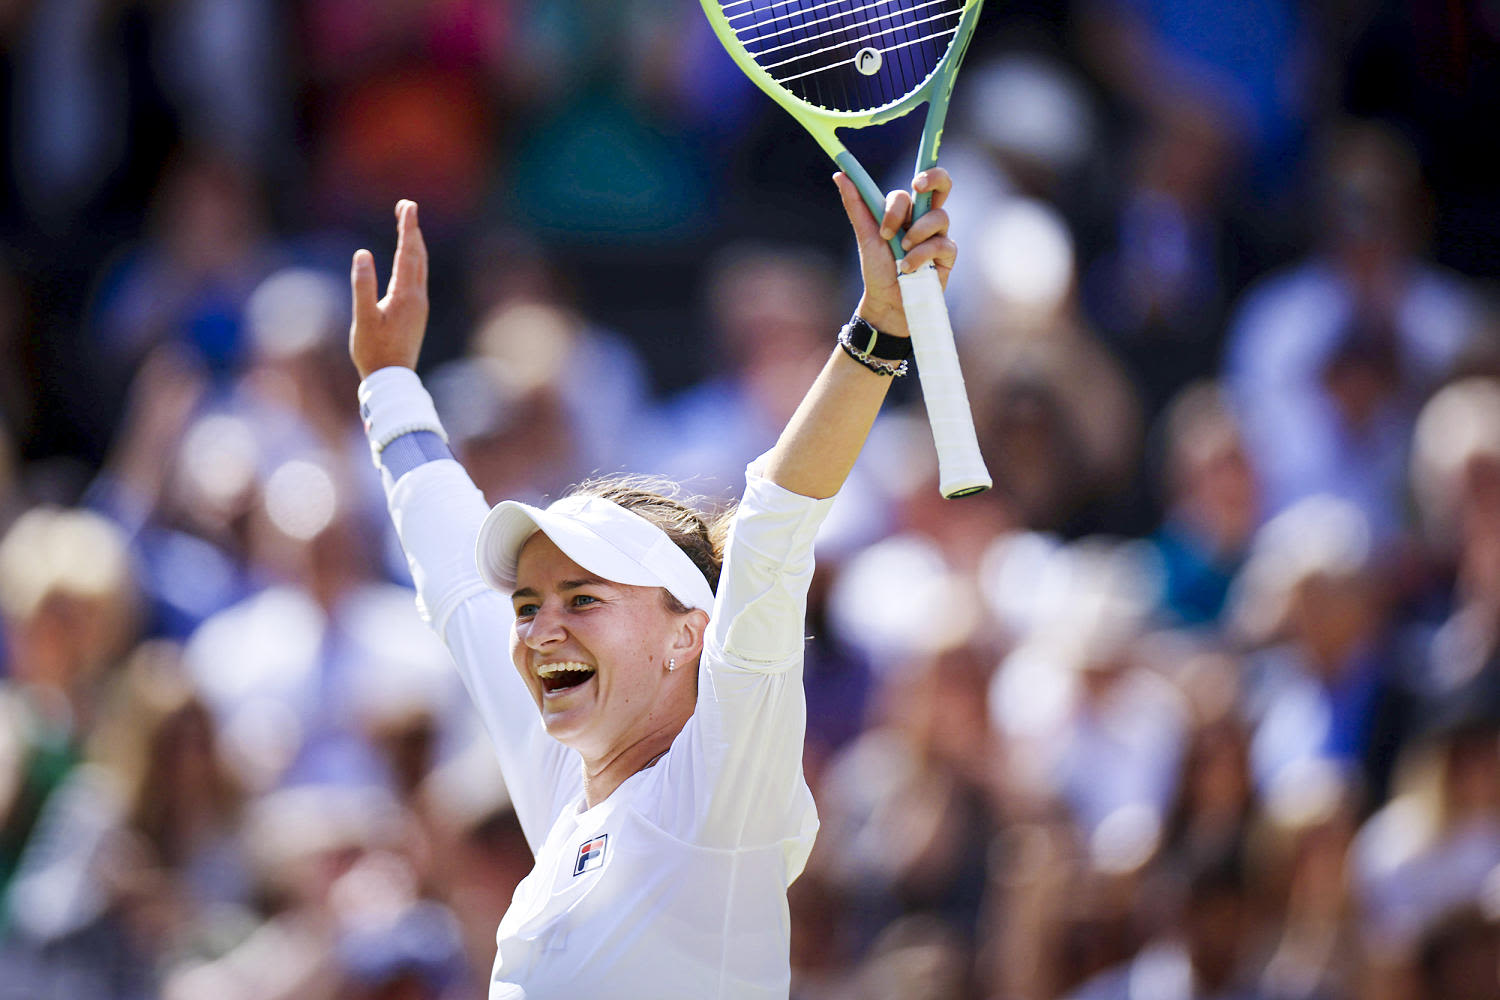 Czech Barbora Krejcikova wins the Wimbledon women’s title, beating Italy’s Jasmine Paolini in 3 sets